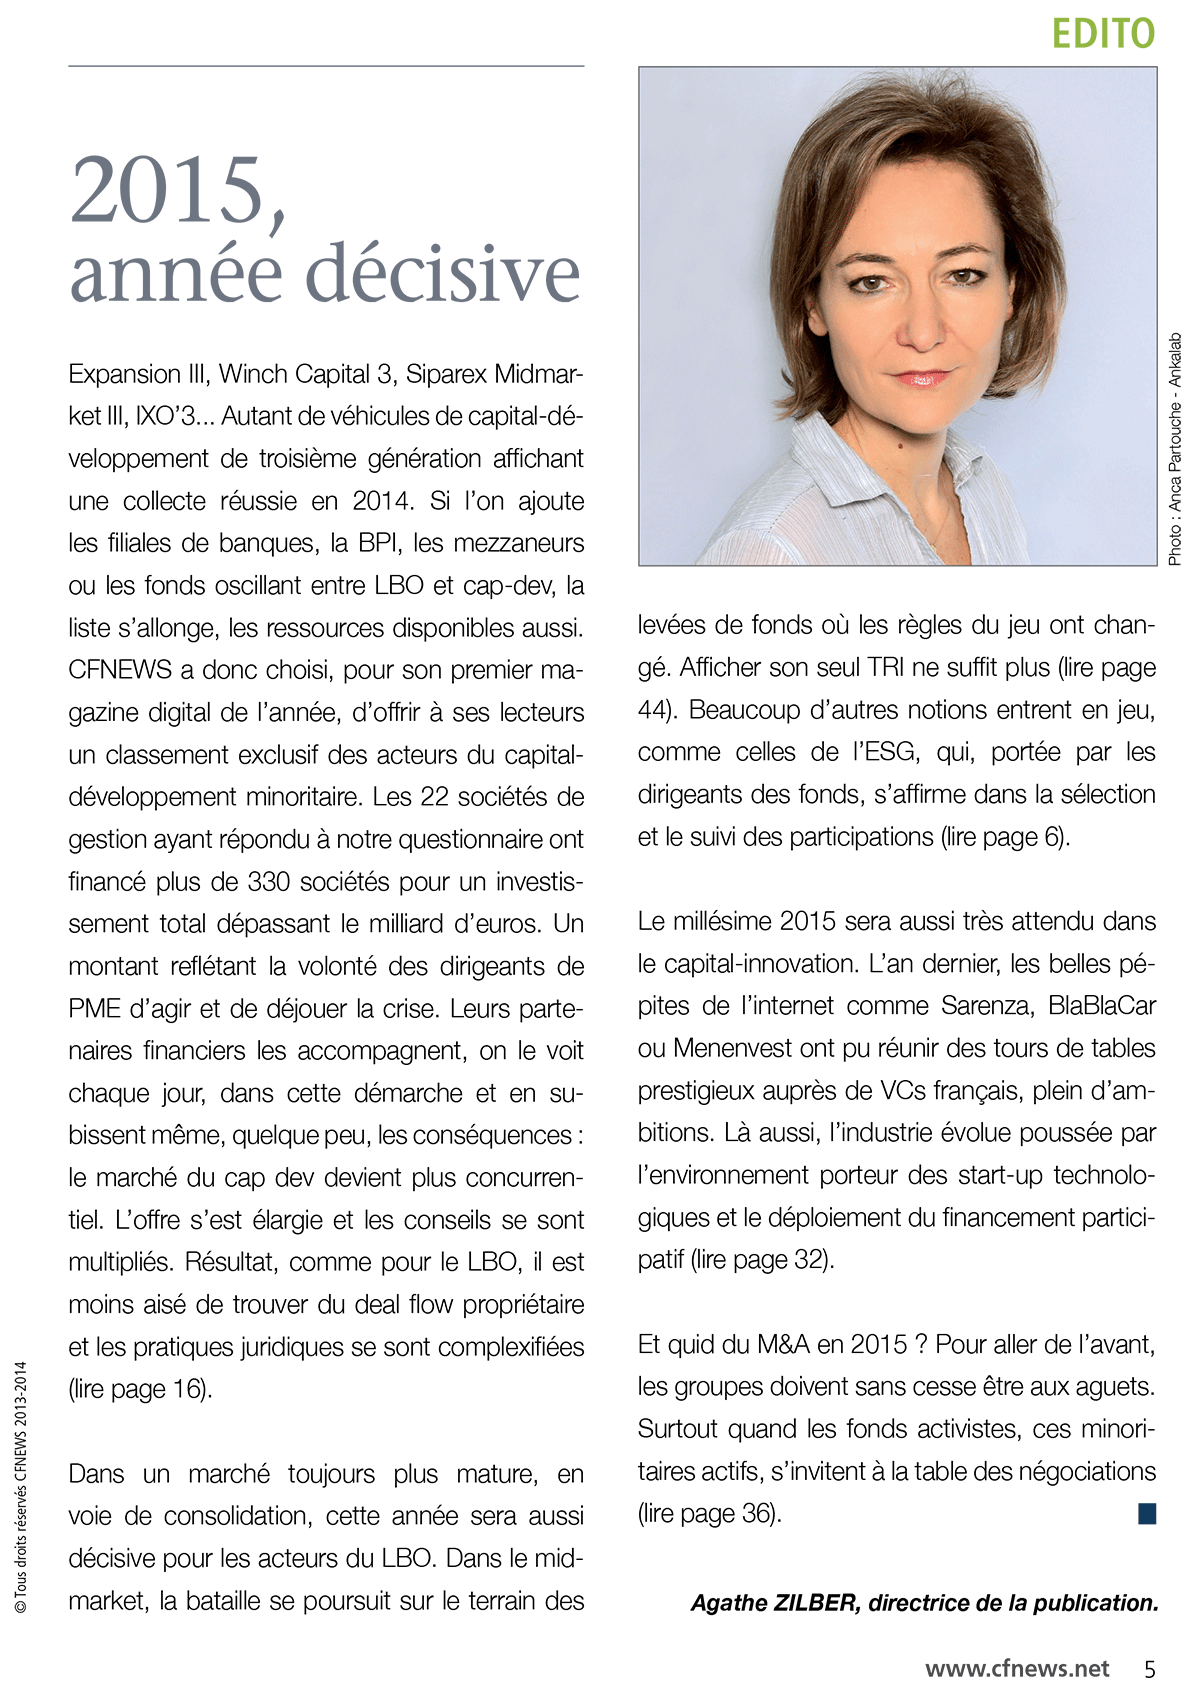 fev2015-2015_annee_decisive